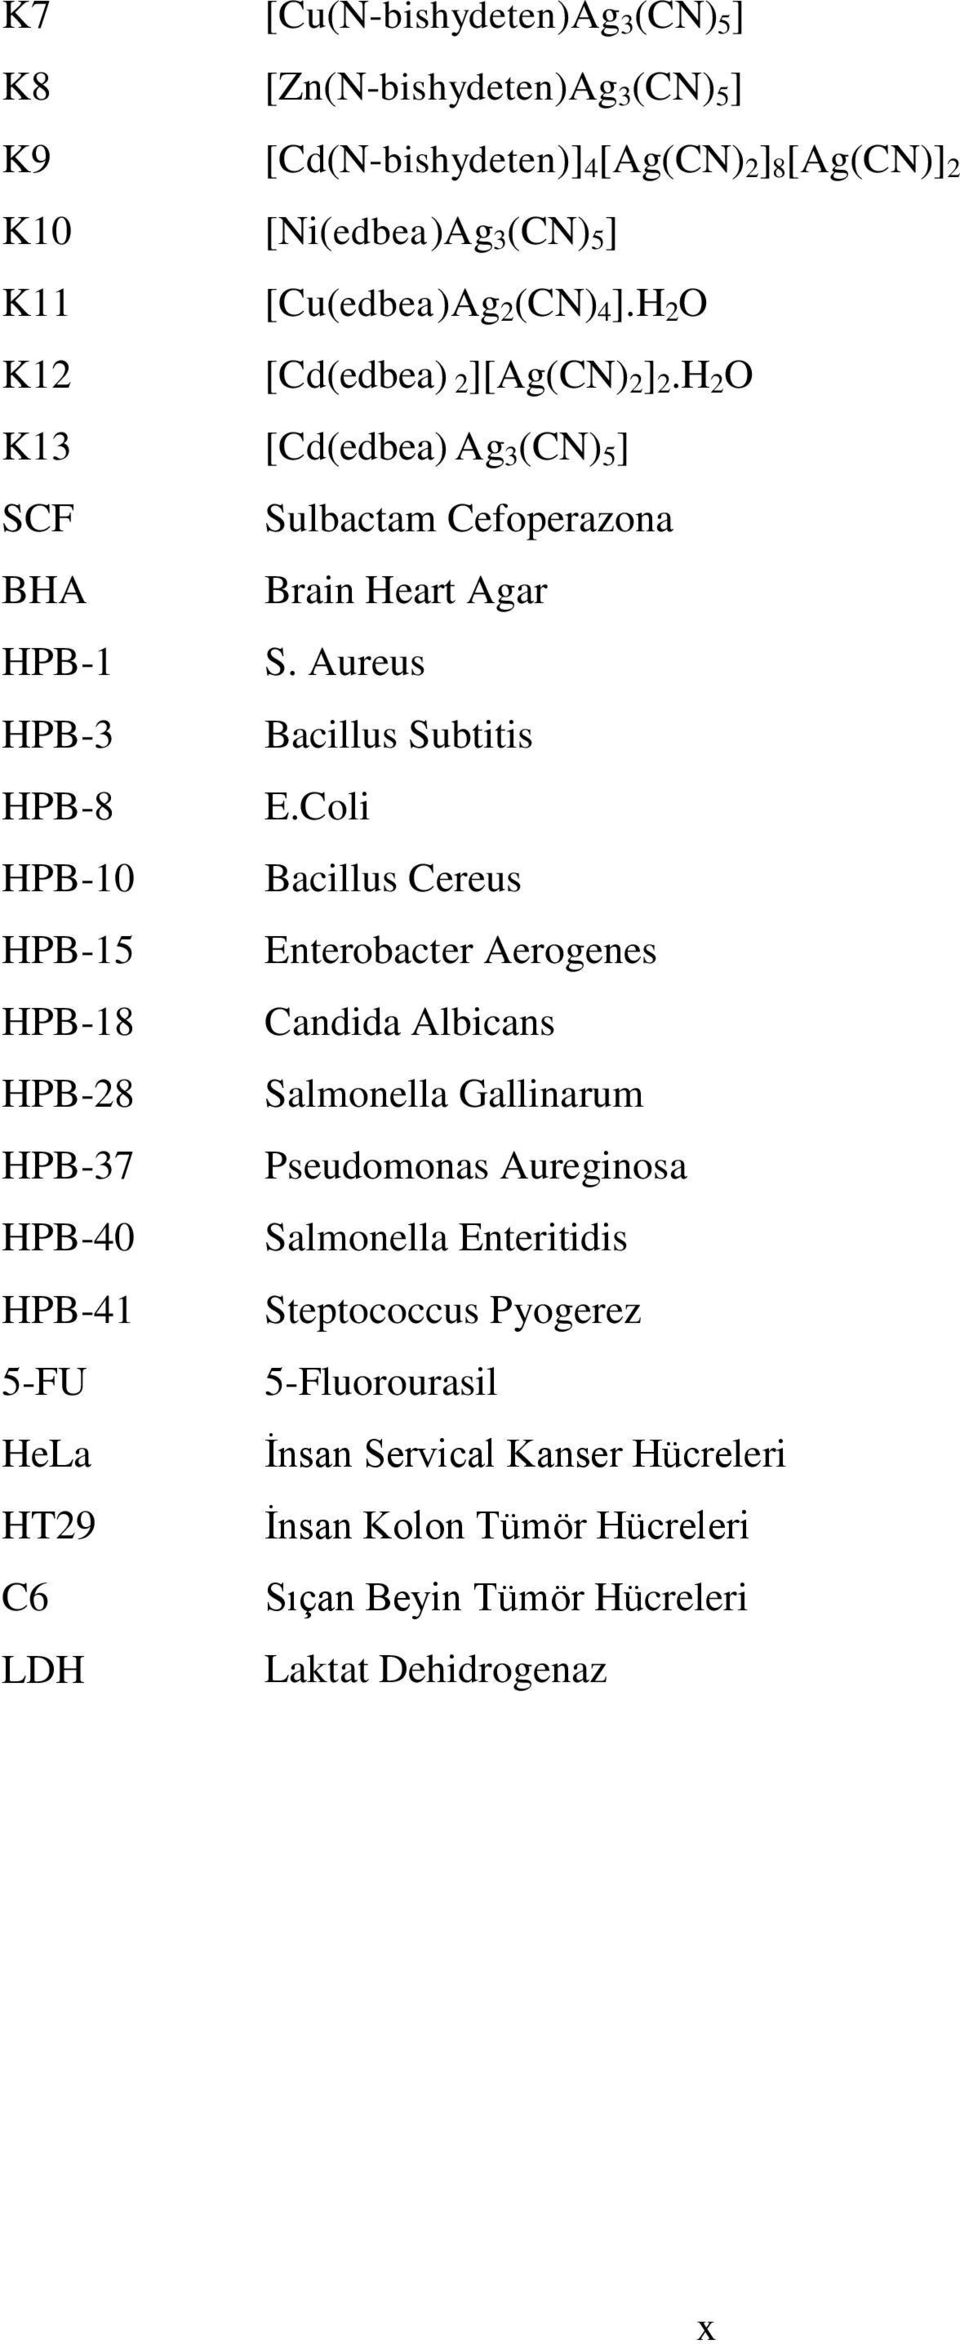 Coli HPB-10 Bacillus Cereus HPB-15 Enterobacter Aerogenes HPB-18 Candida Albicans HPB-28 Salmonella Gallinarum HPB-37 Pseudomonas Aureginosa HPB-40 Salmonella Enteritidis